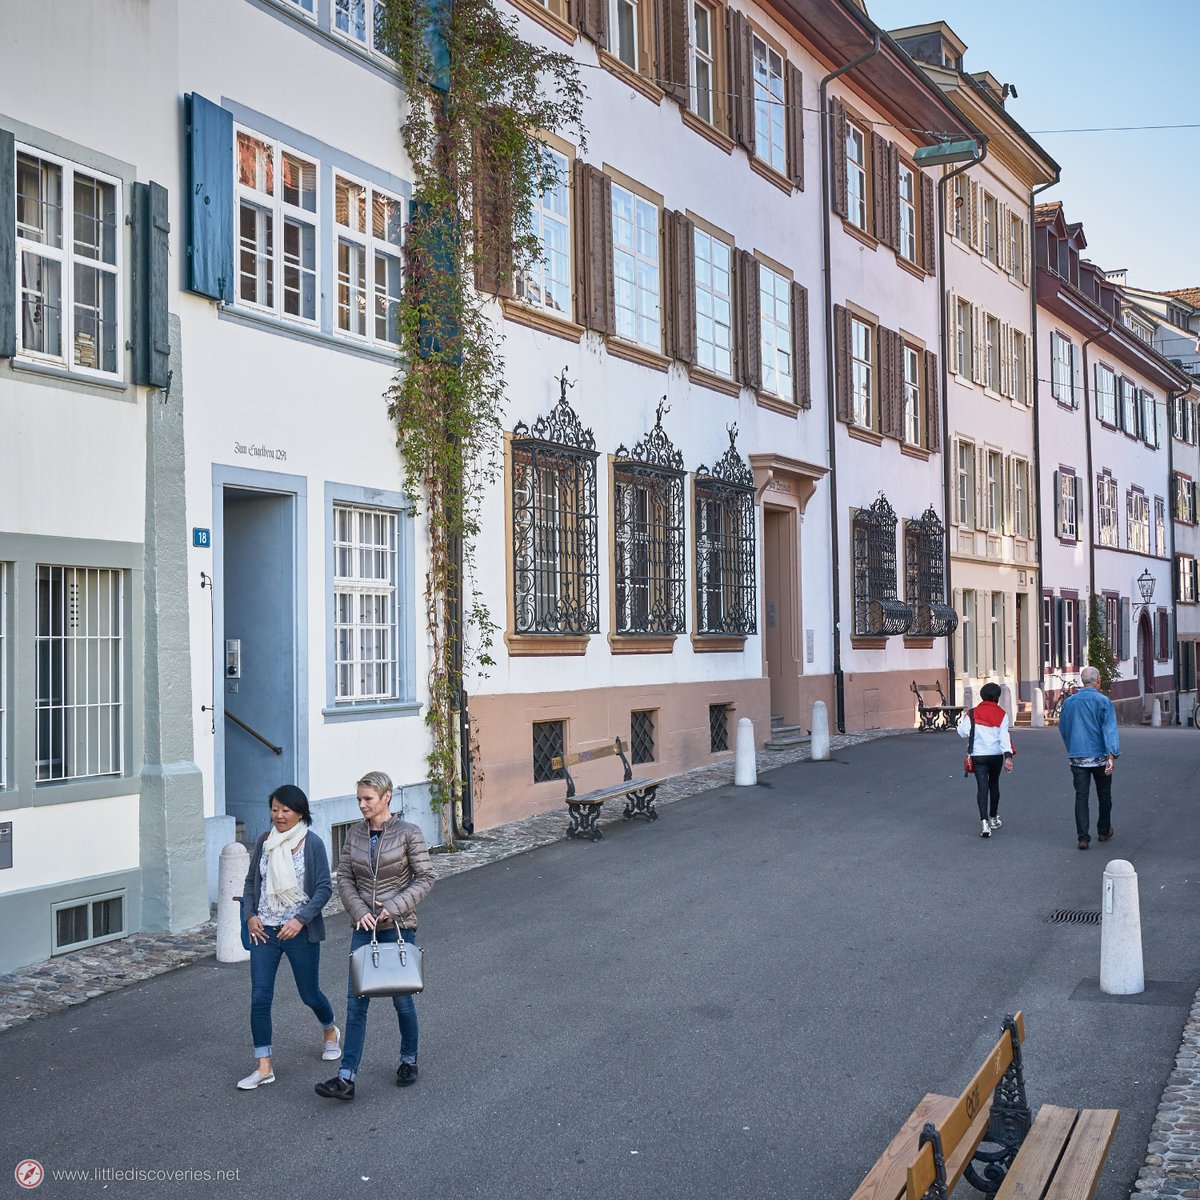 The old town of Basel is ideal for exploring on foot. #reiseblog #weltenbummler #reisefieber #reiselust #schweiz #artbasel #basel #blickheimat #switzerland_bestpix #instaswiss #topswitzerlandphoto #verliebtindieschweiz #baselcity #baselswizz #baselstadt #schweiztourismus